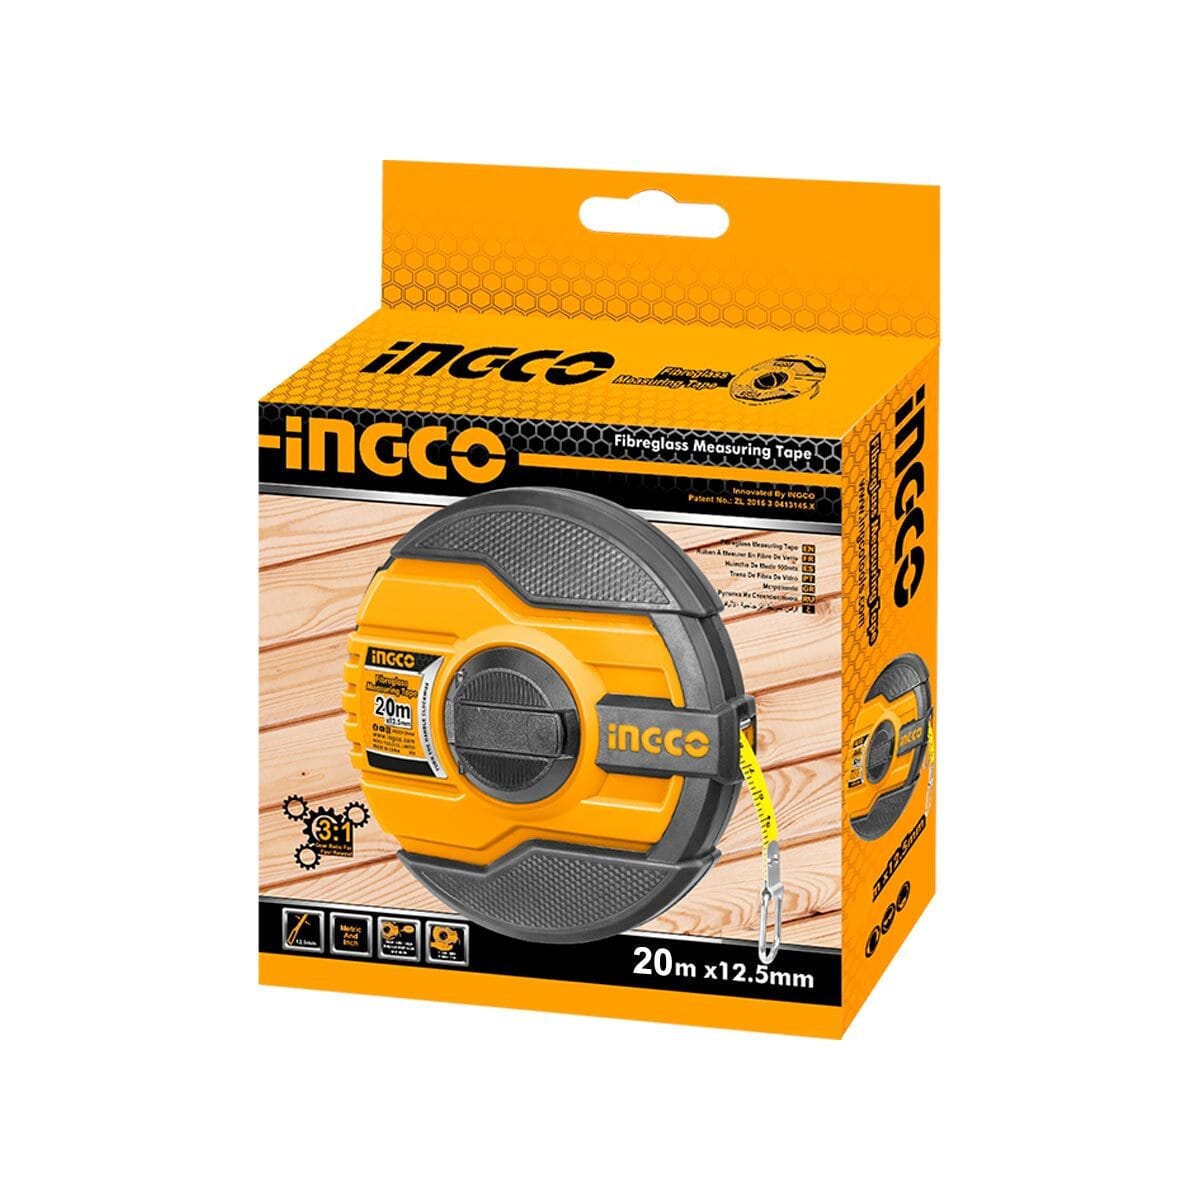 Buy Ingco Fiberglass Measuring Tape 20m x 12.5mm (HFMT8320) in Accra, Ghana | Supply Master Tape Measure Buy Tools hardware Building materials